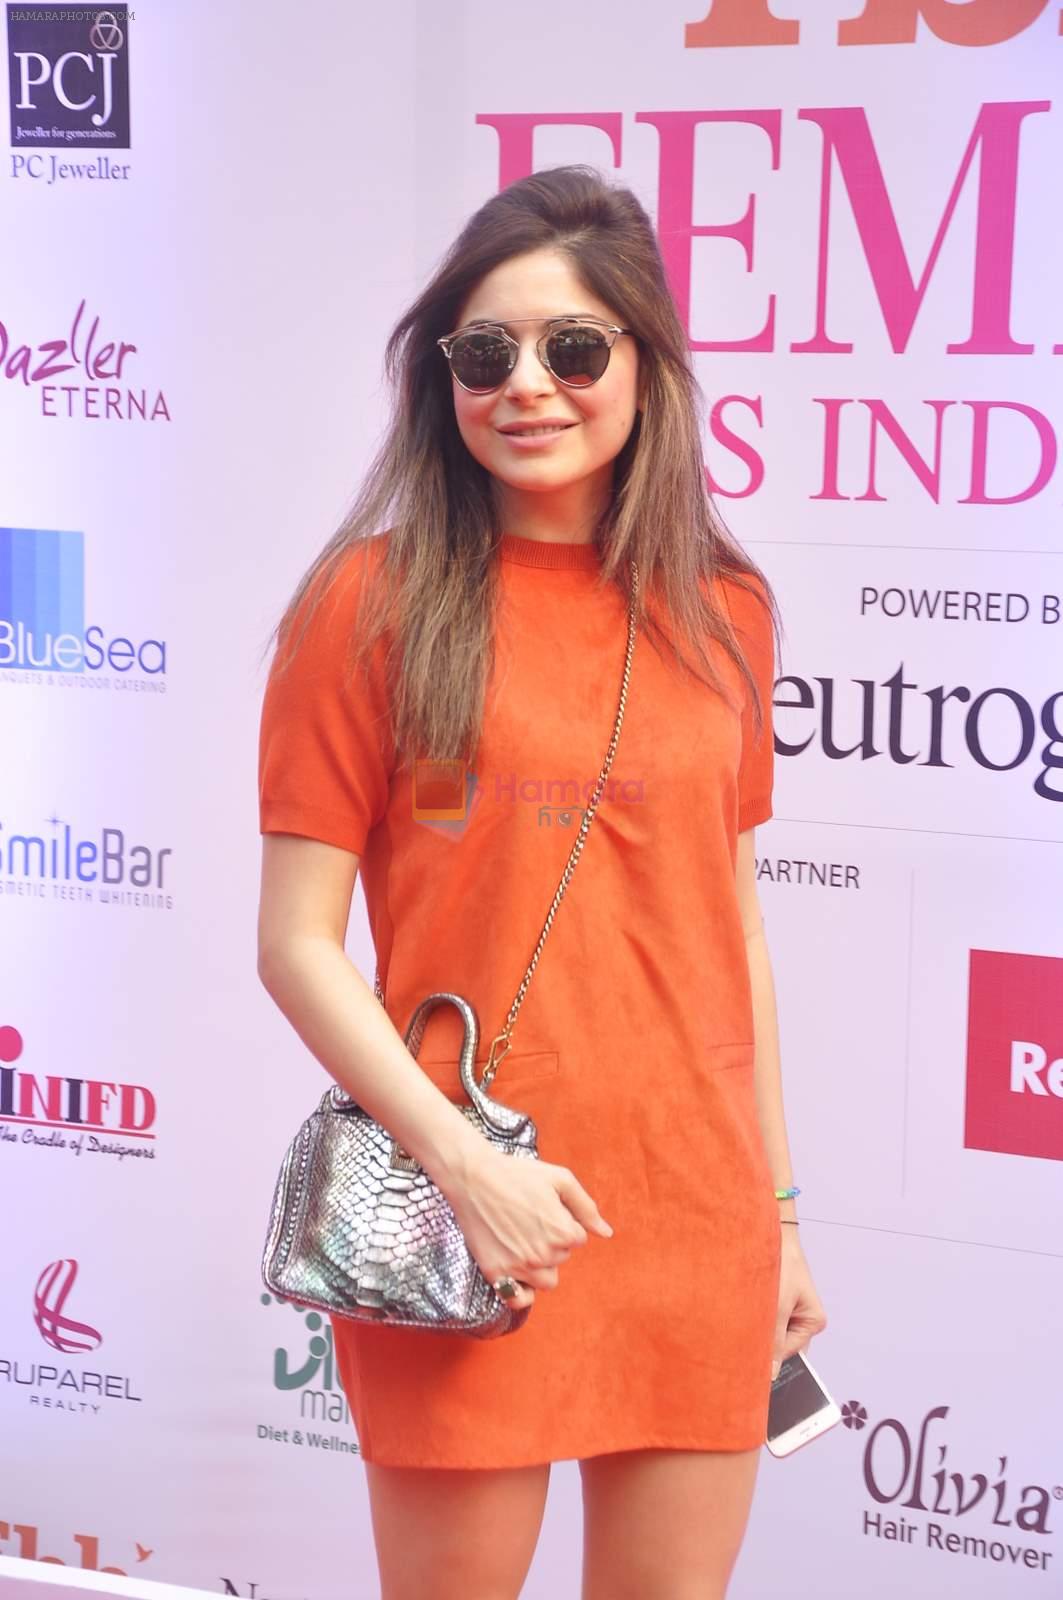 at Femina Miss India finals red carpet in Yashraj Studios on 28th March 2015